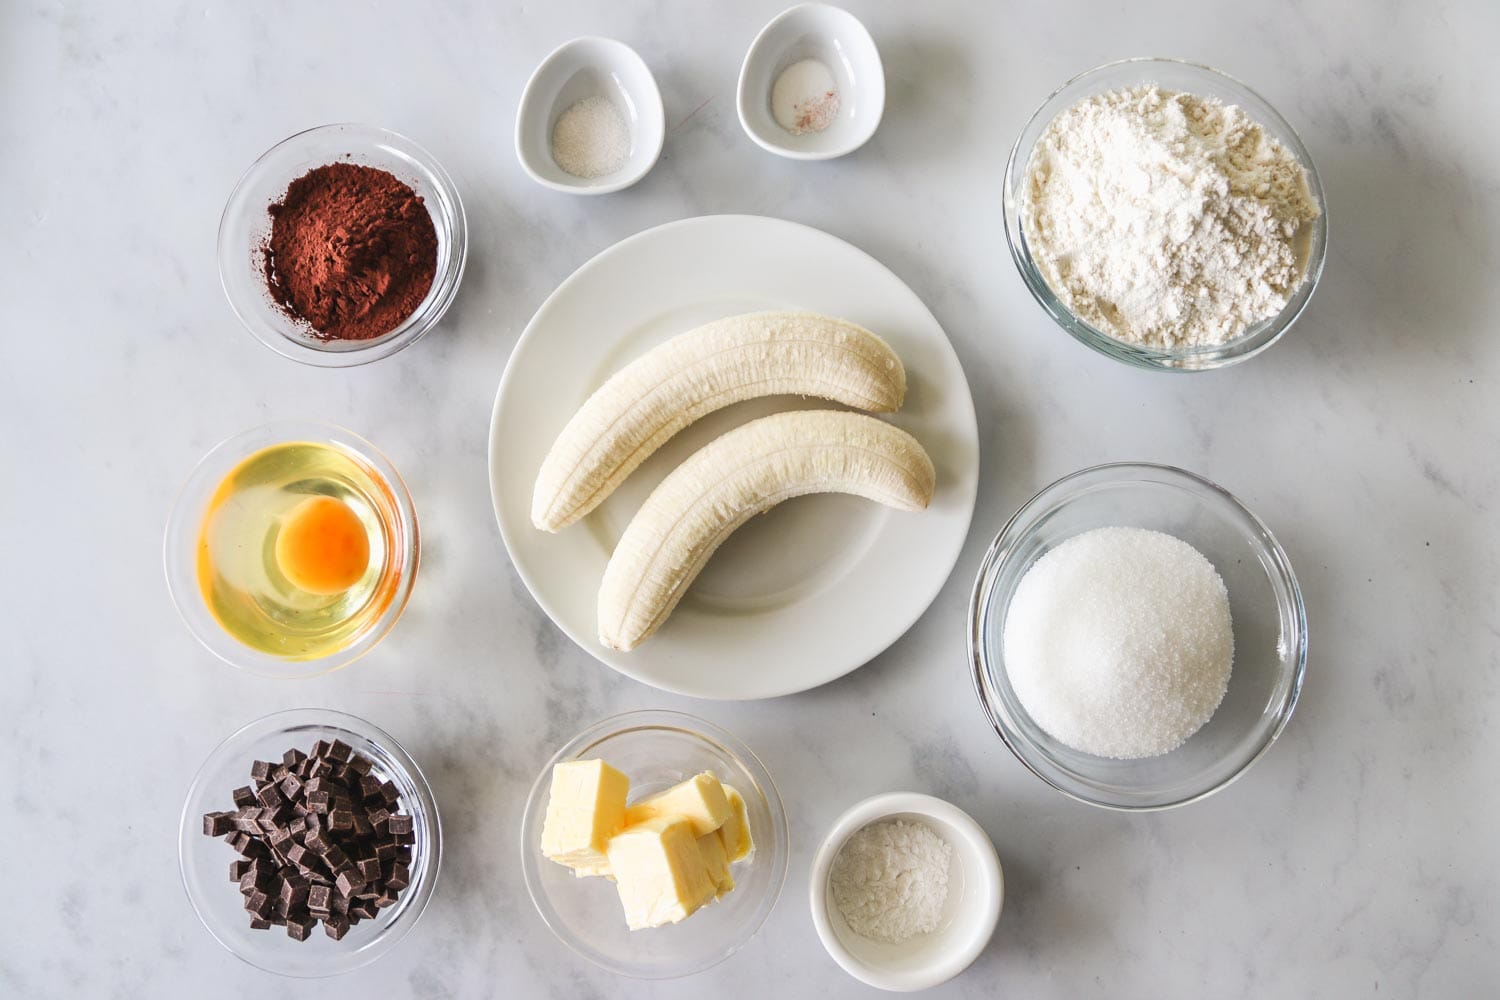 Ingredients needed to make chocolate banana muffins